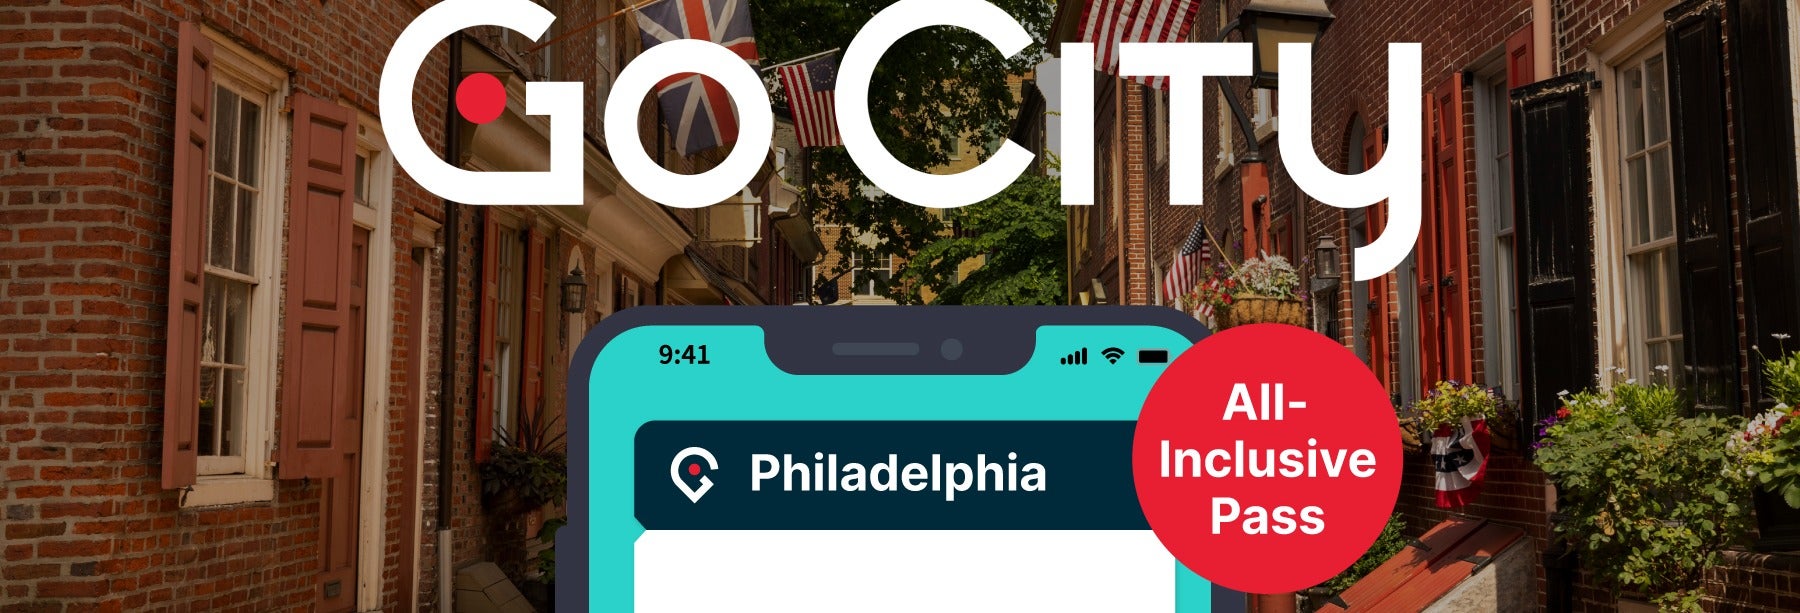 Go City: Philadelphia All-Inclusive Pass